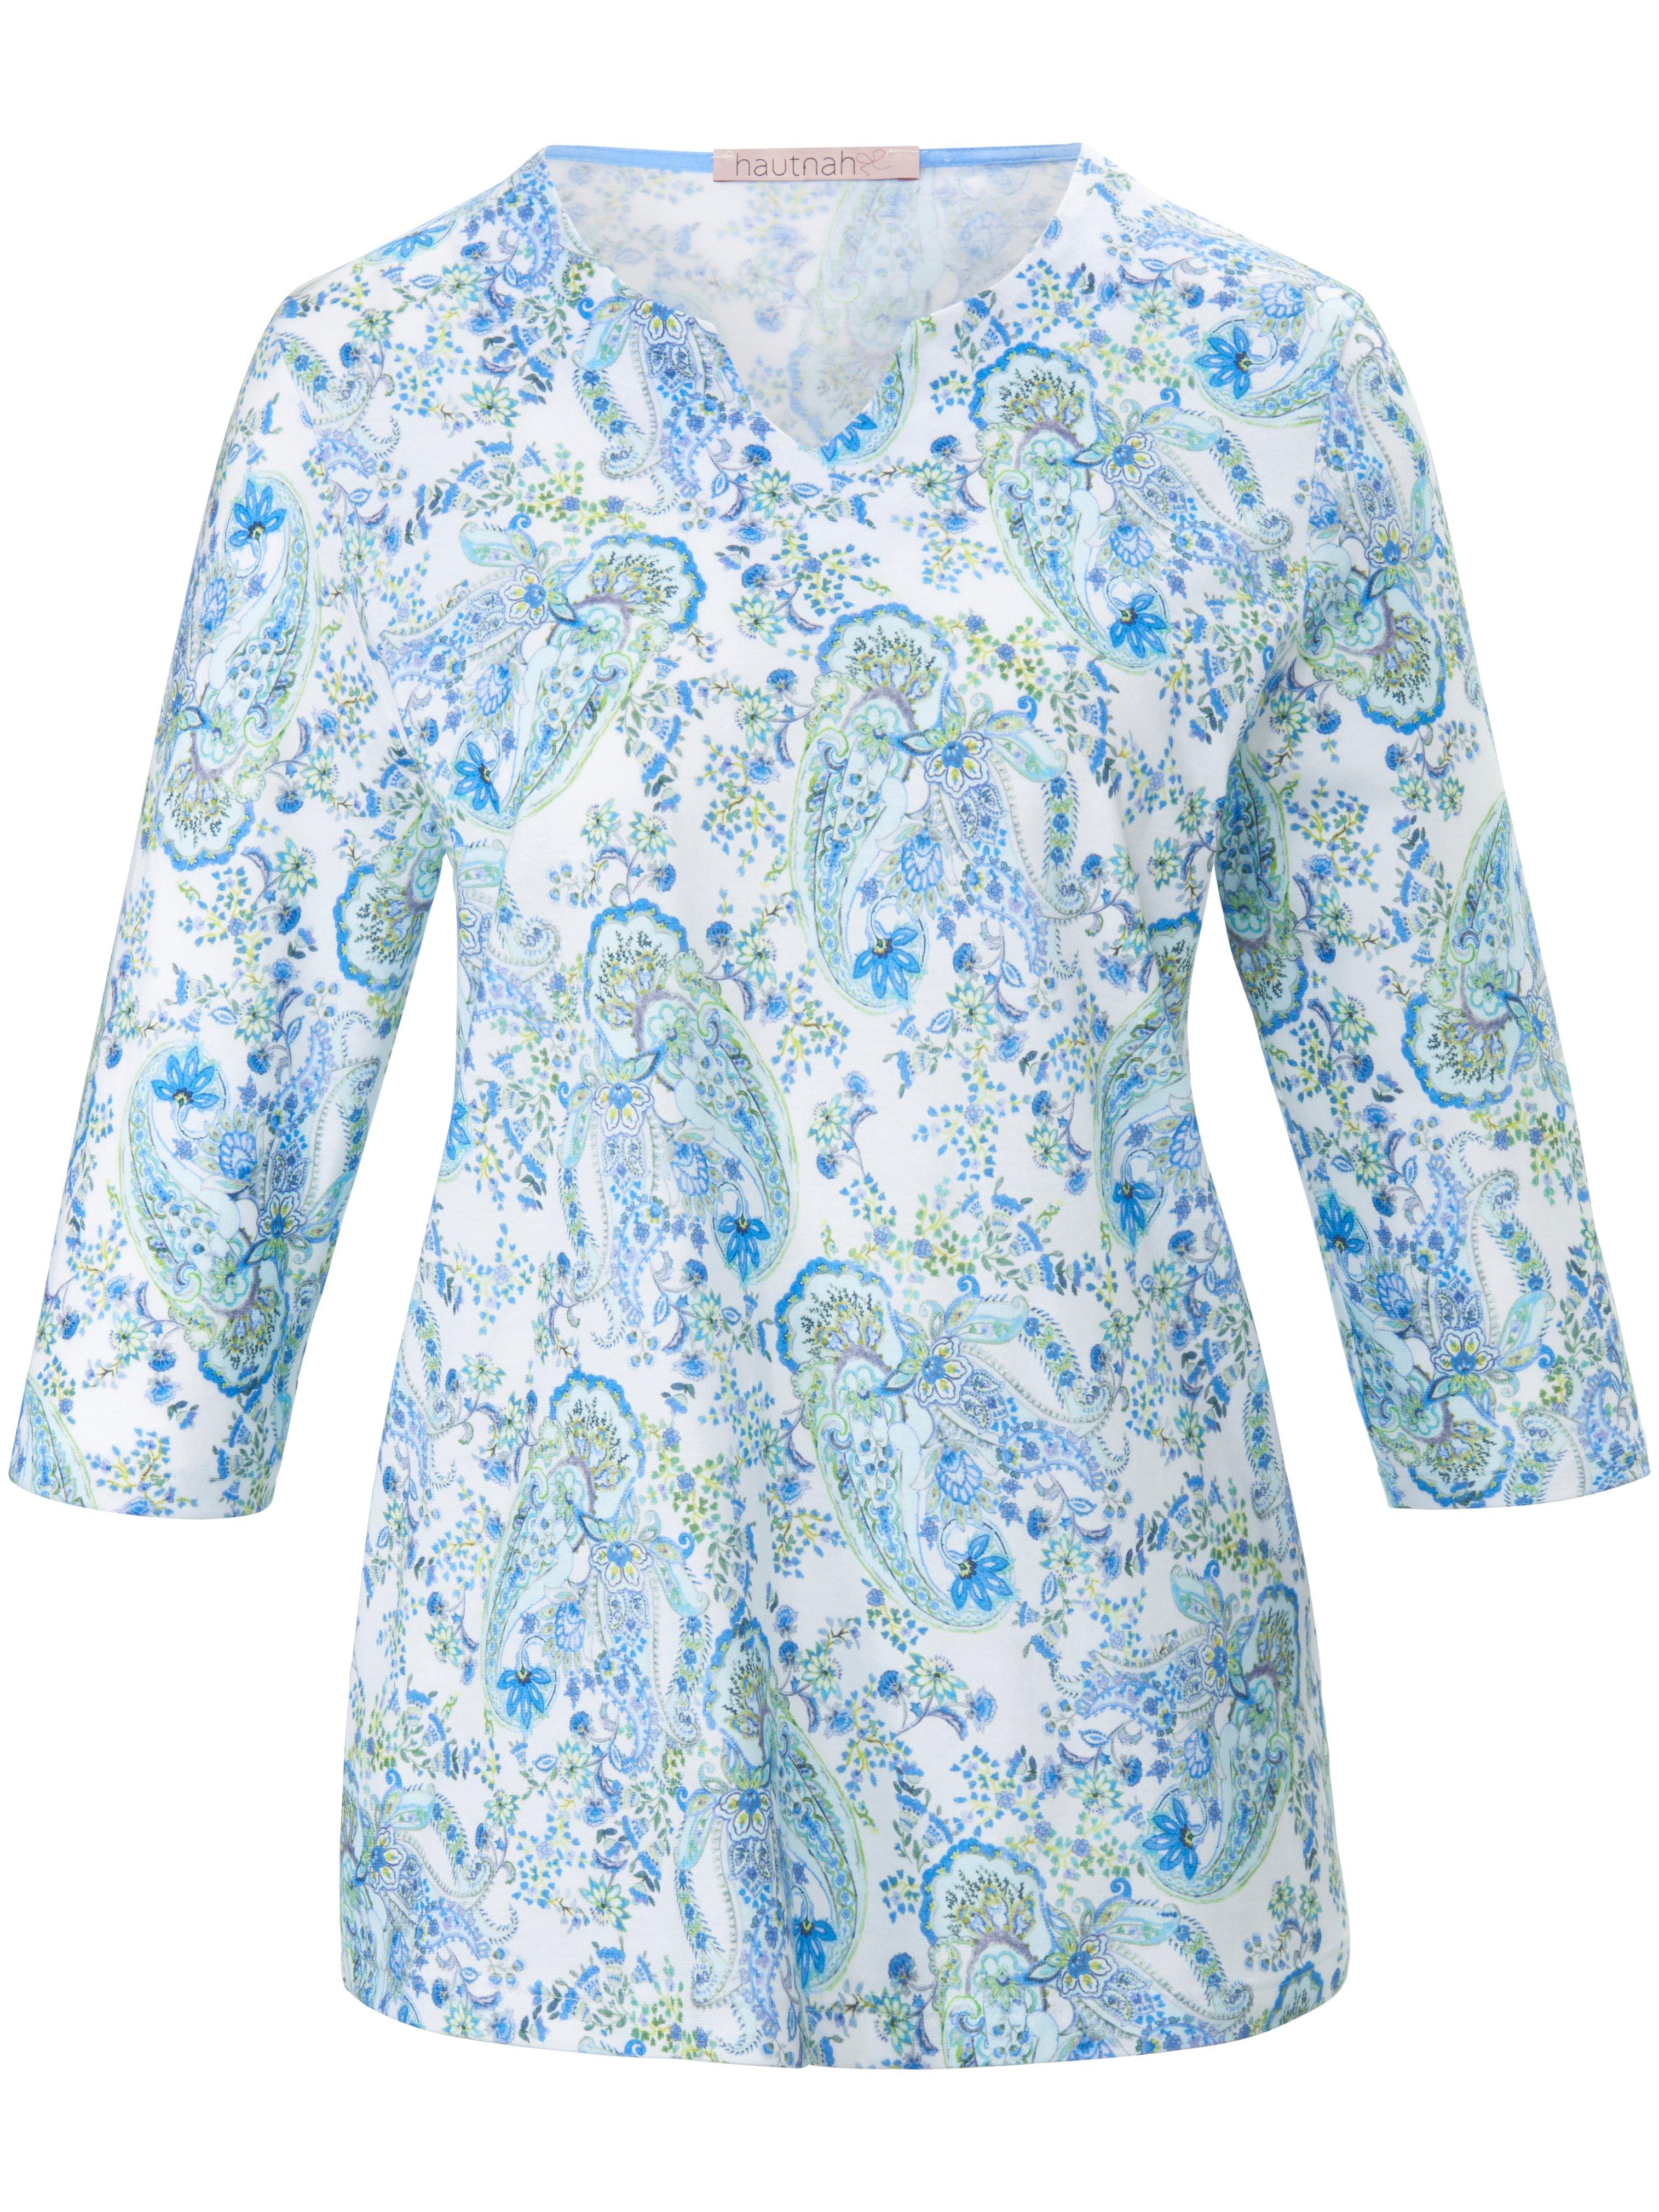 Le pyjama 100% coton  Hautnah turquoise